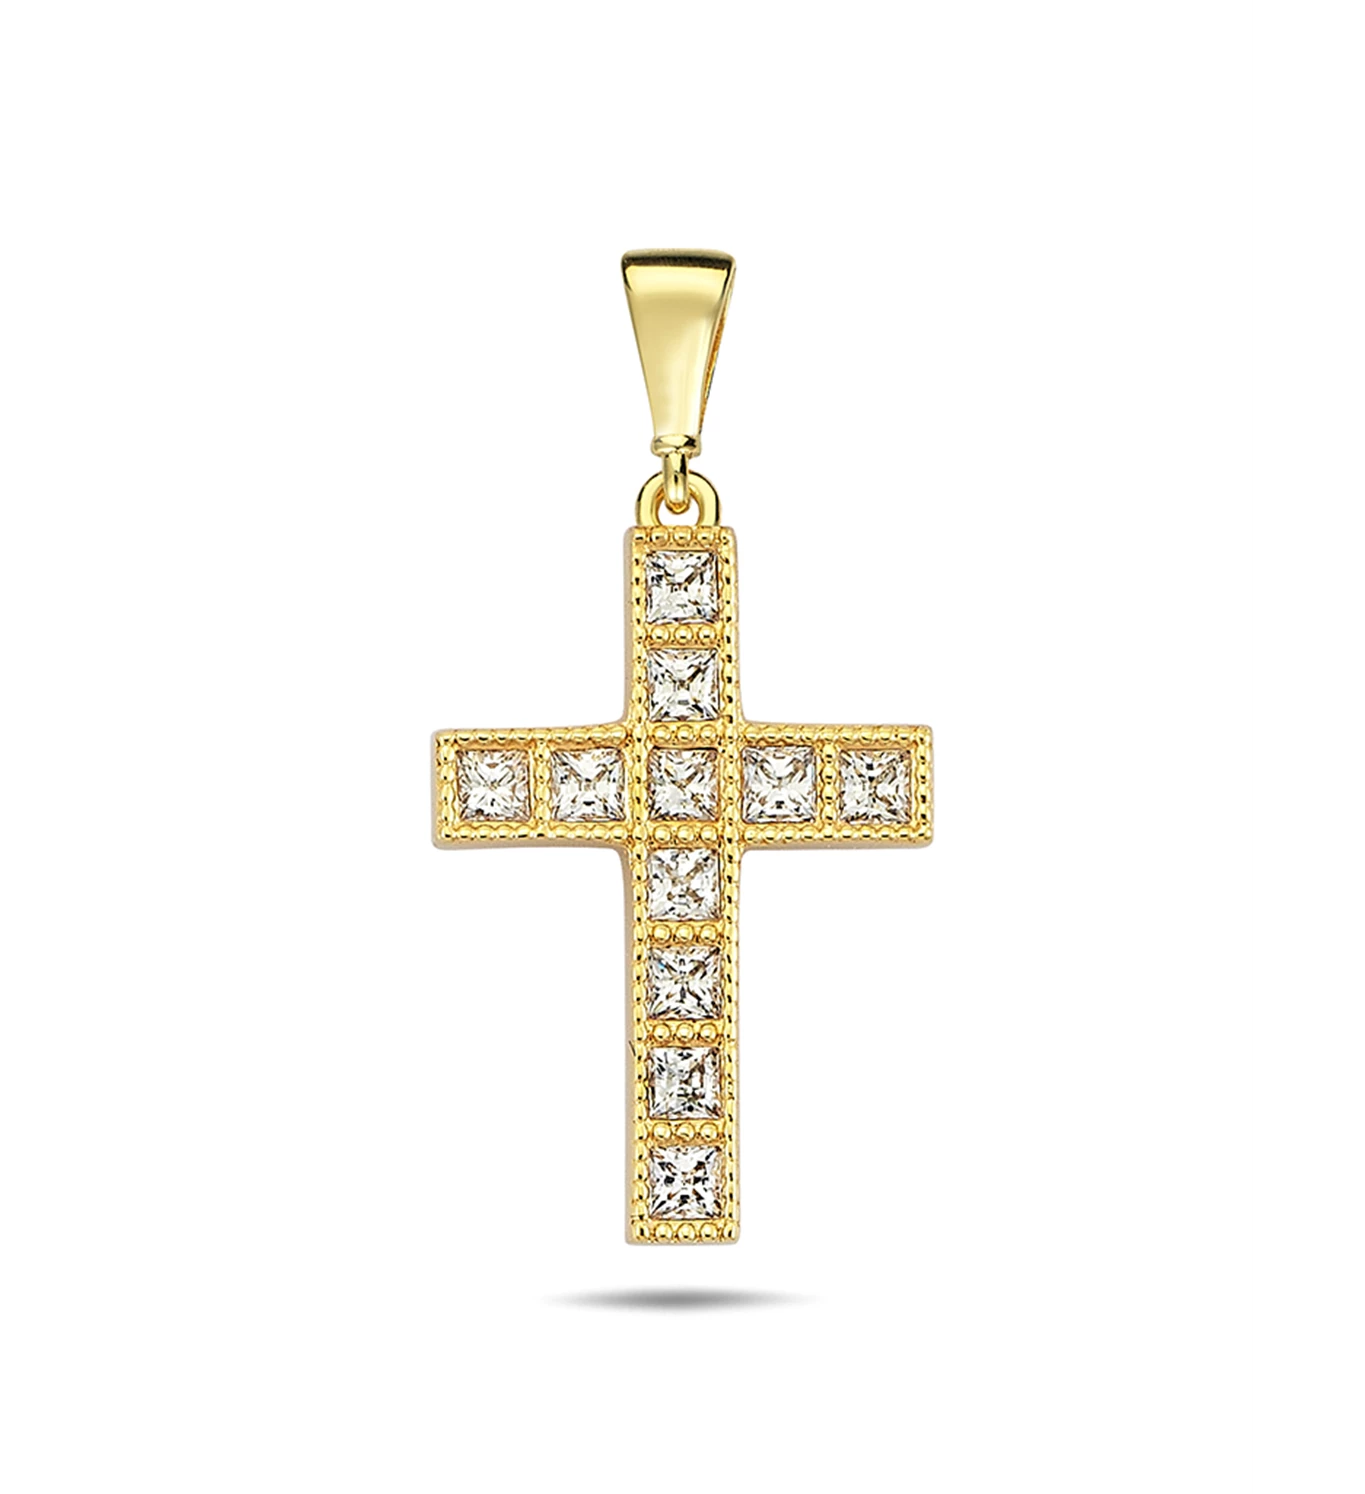 Glossy Cross gold pendant